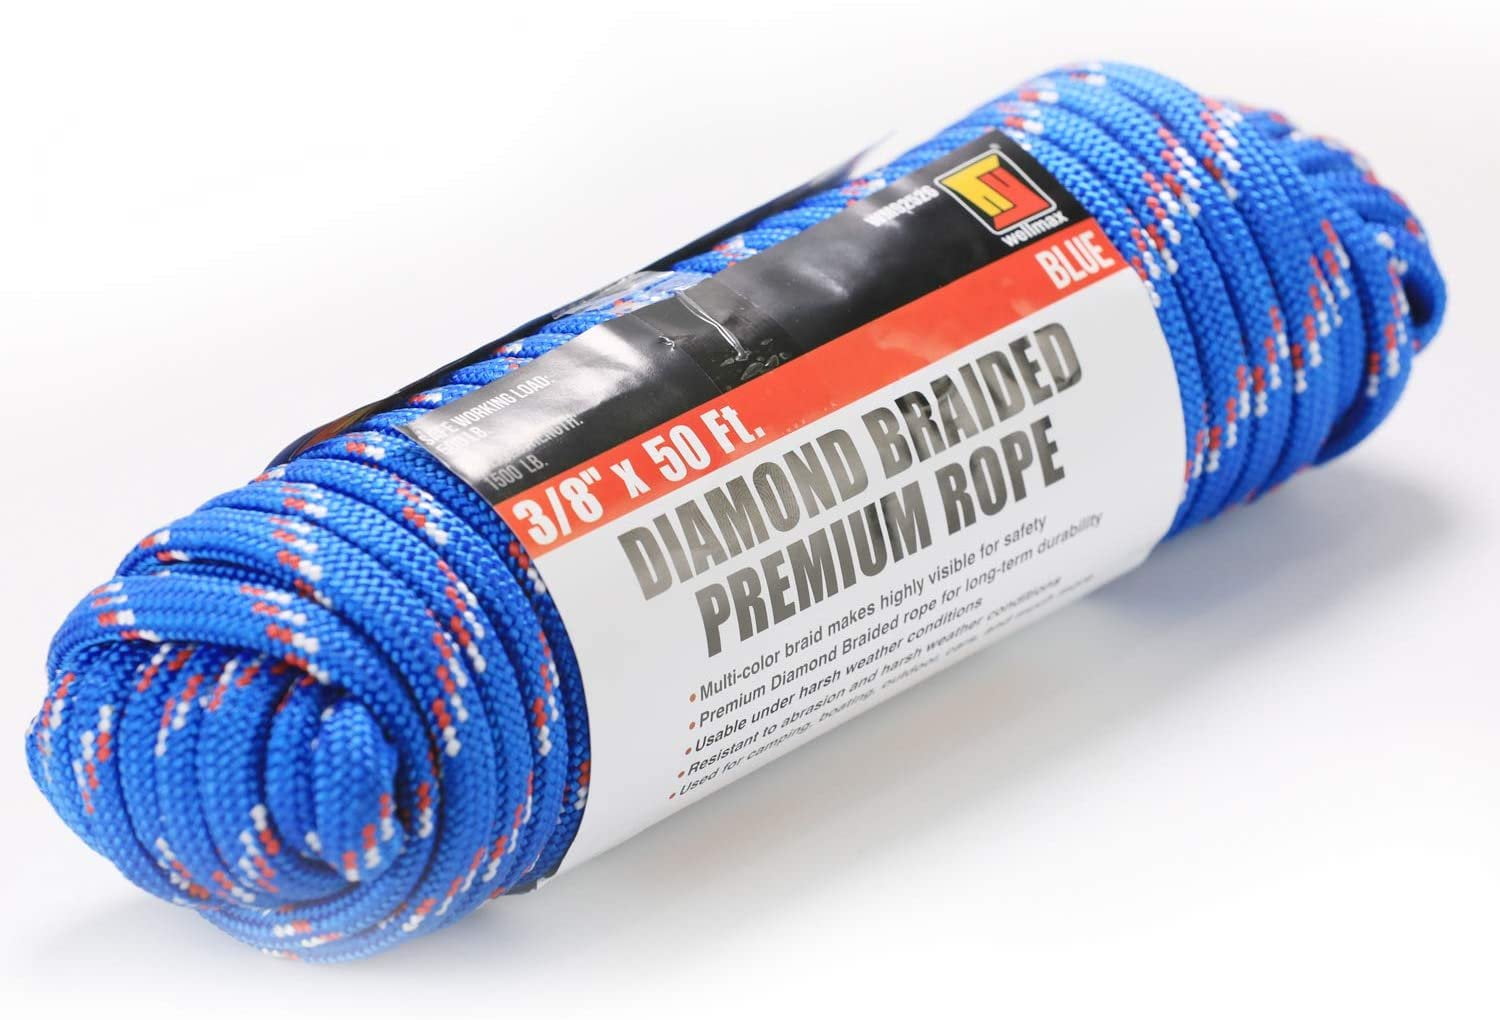 Wellmax Diamond Braid Nylon Rope, 3/8 inch by 50 Feet Blue Color